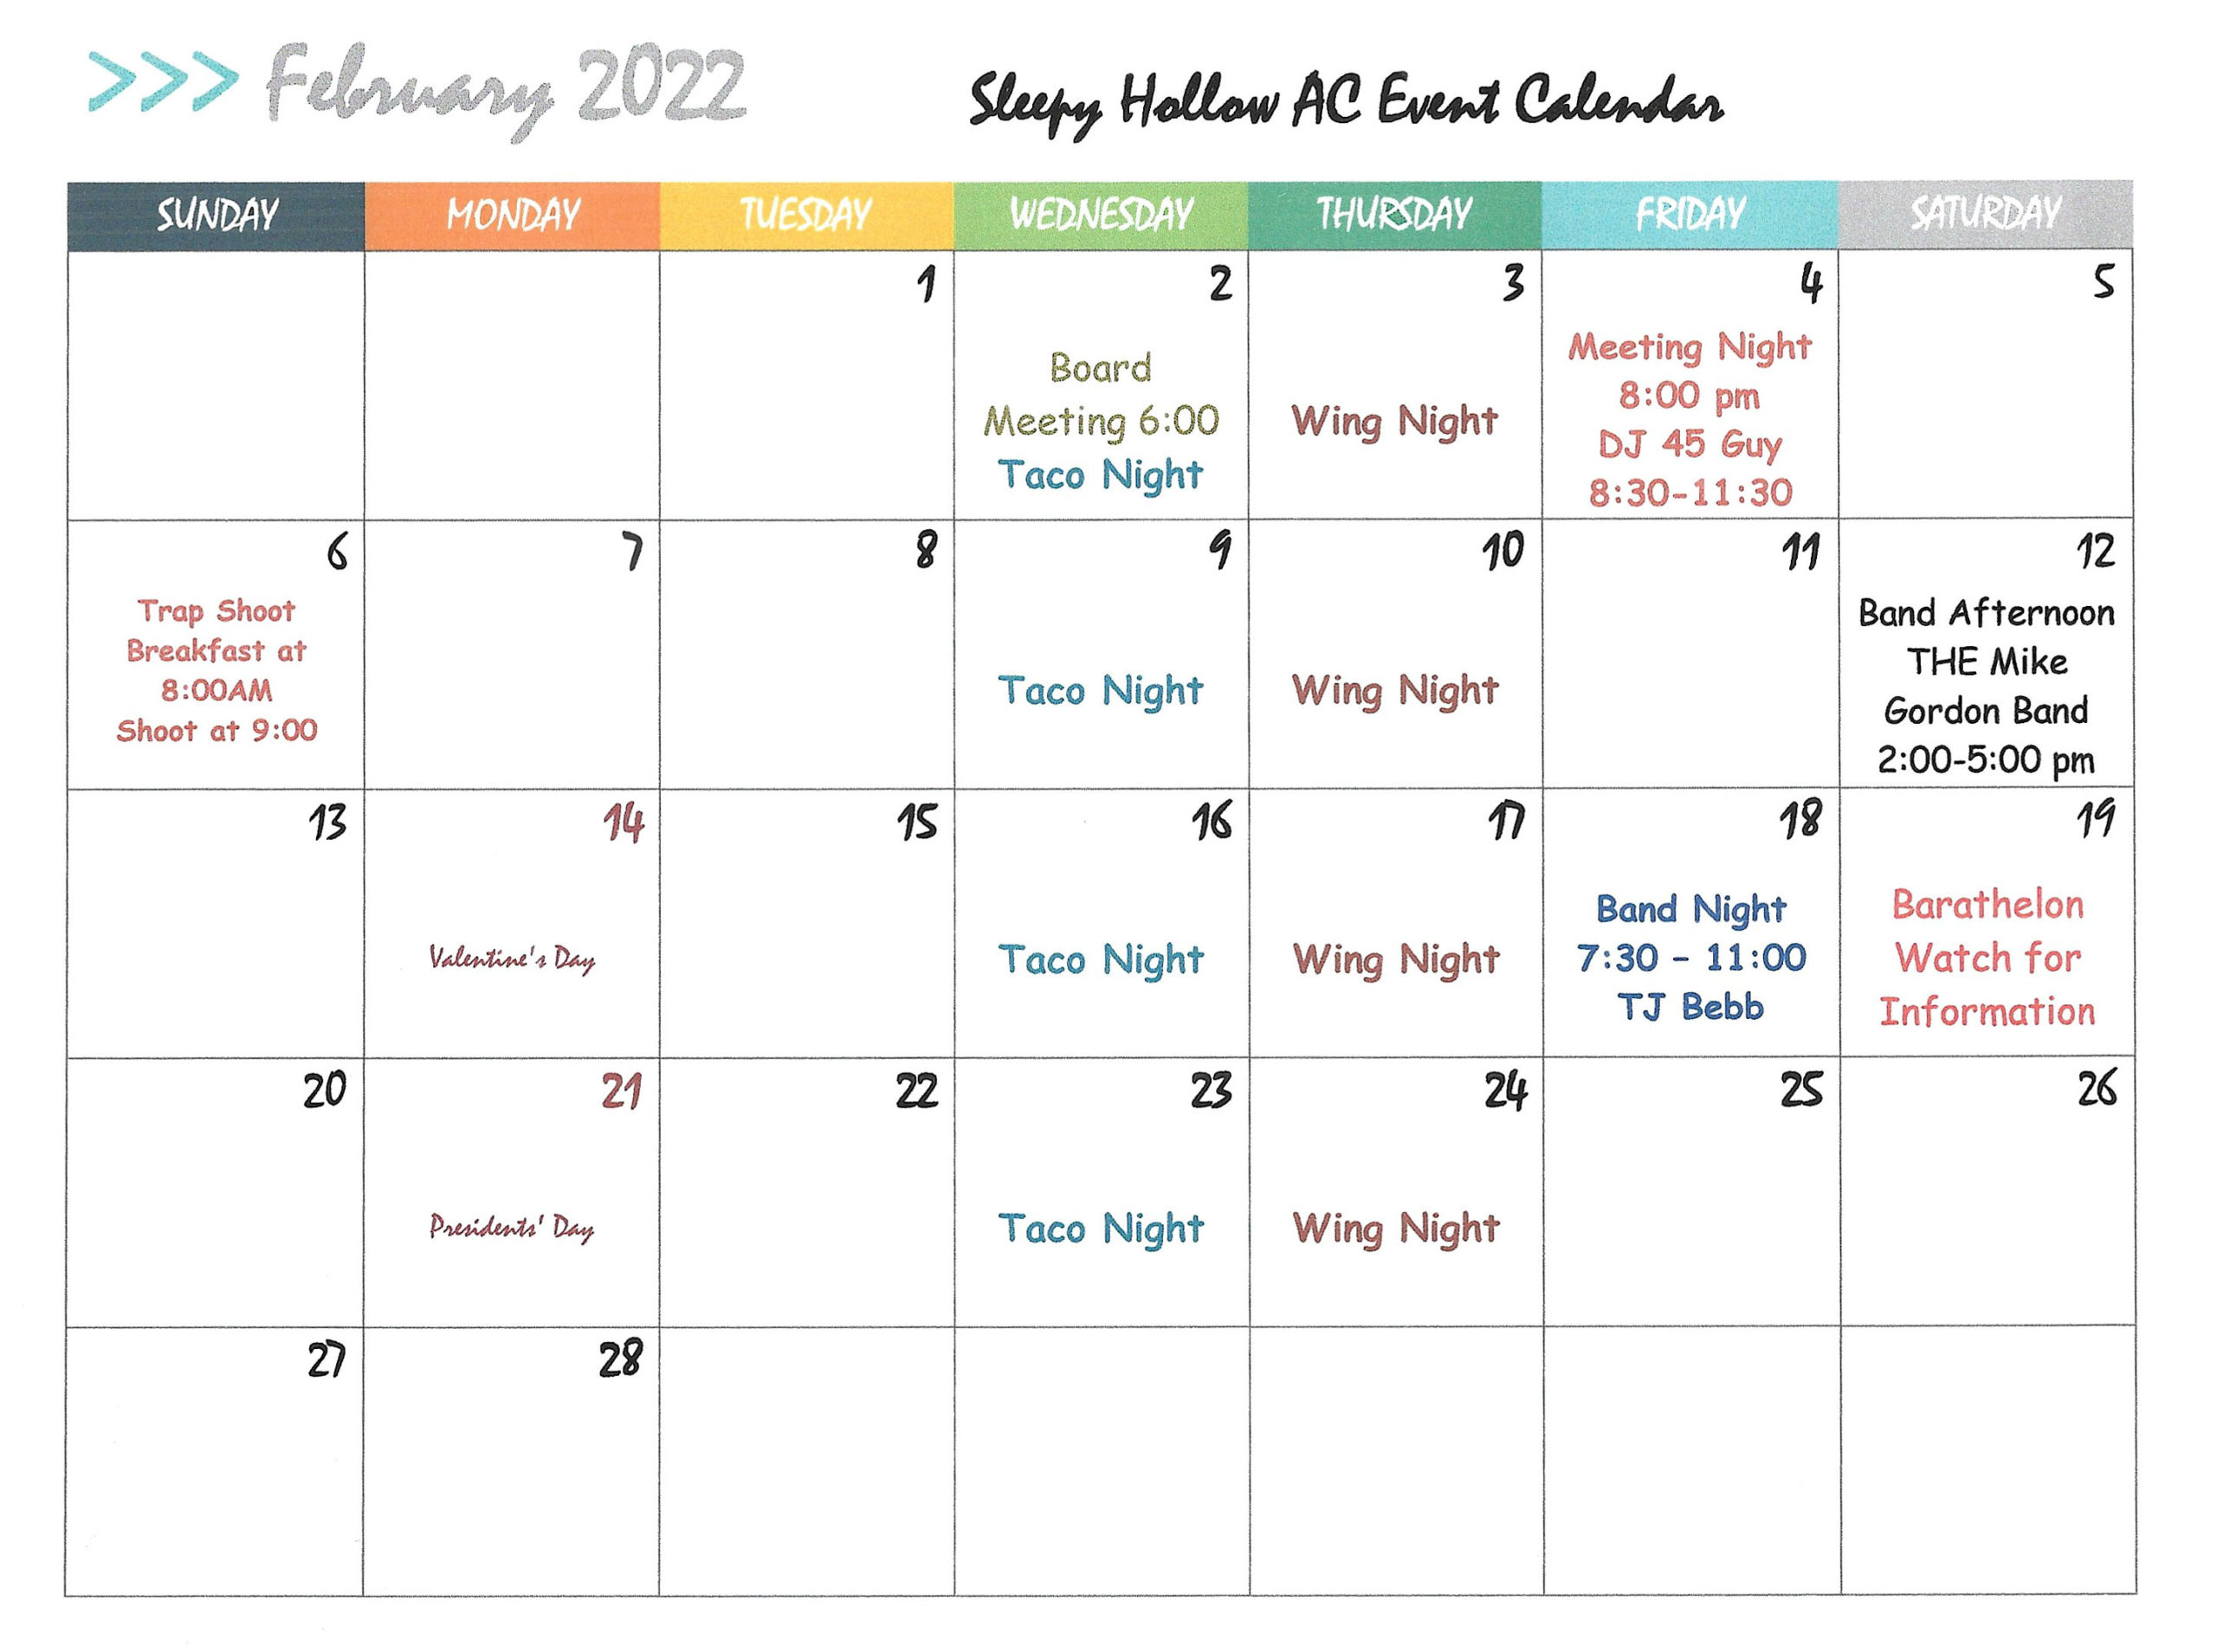 February 2022 Calendar Revised Sleepy Hollow AC